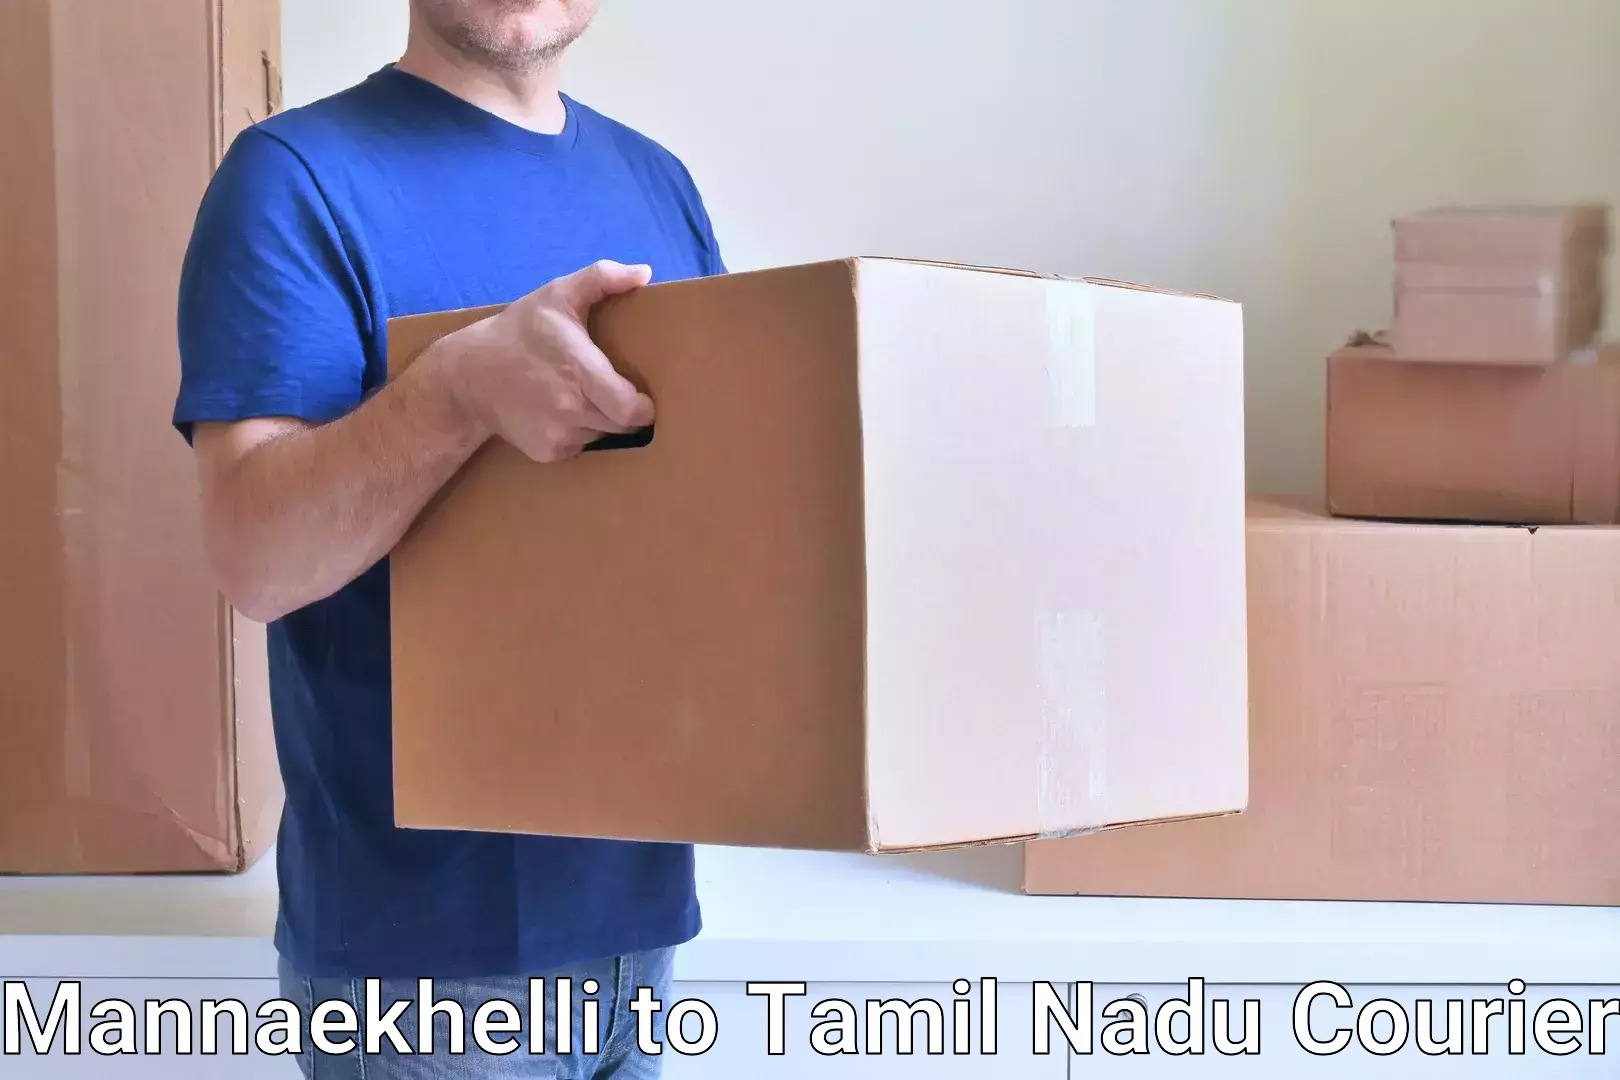 Express delivery solutions Mannaekhelli to Vandavasi